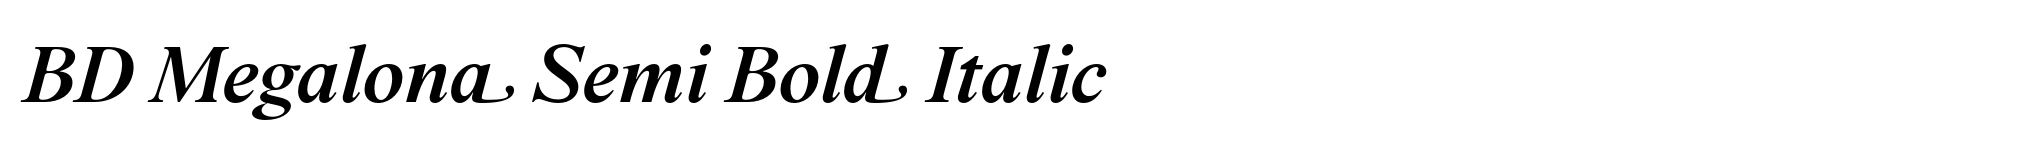 BD Megalona Semi Bold Italic image